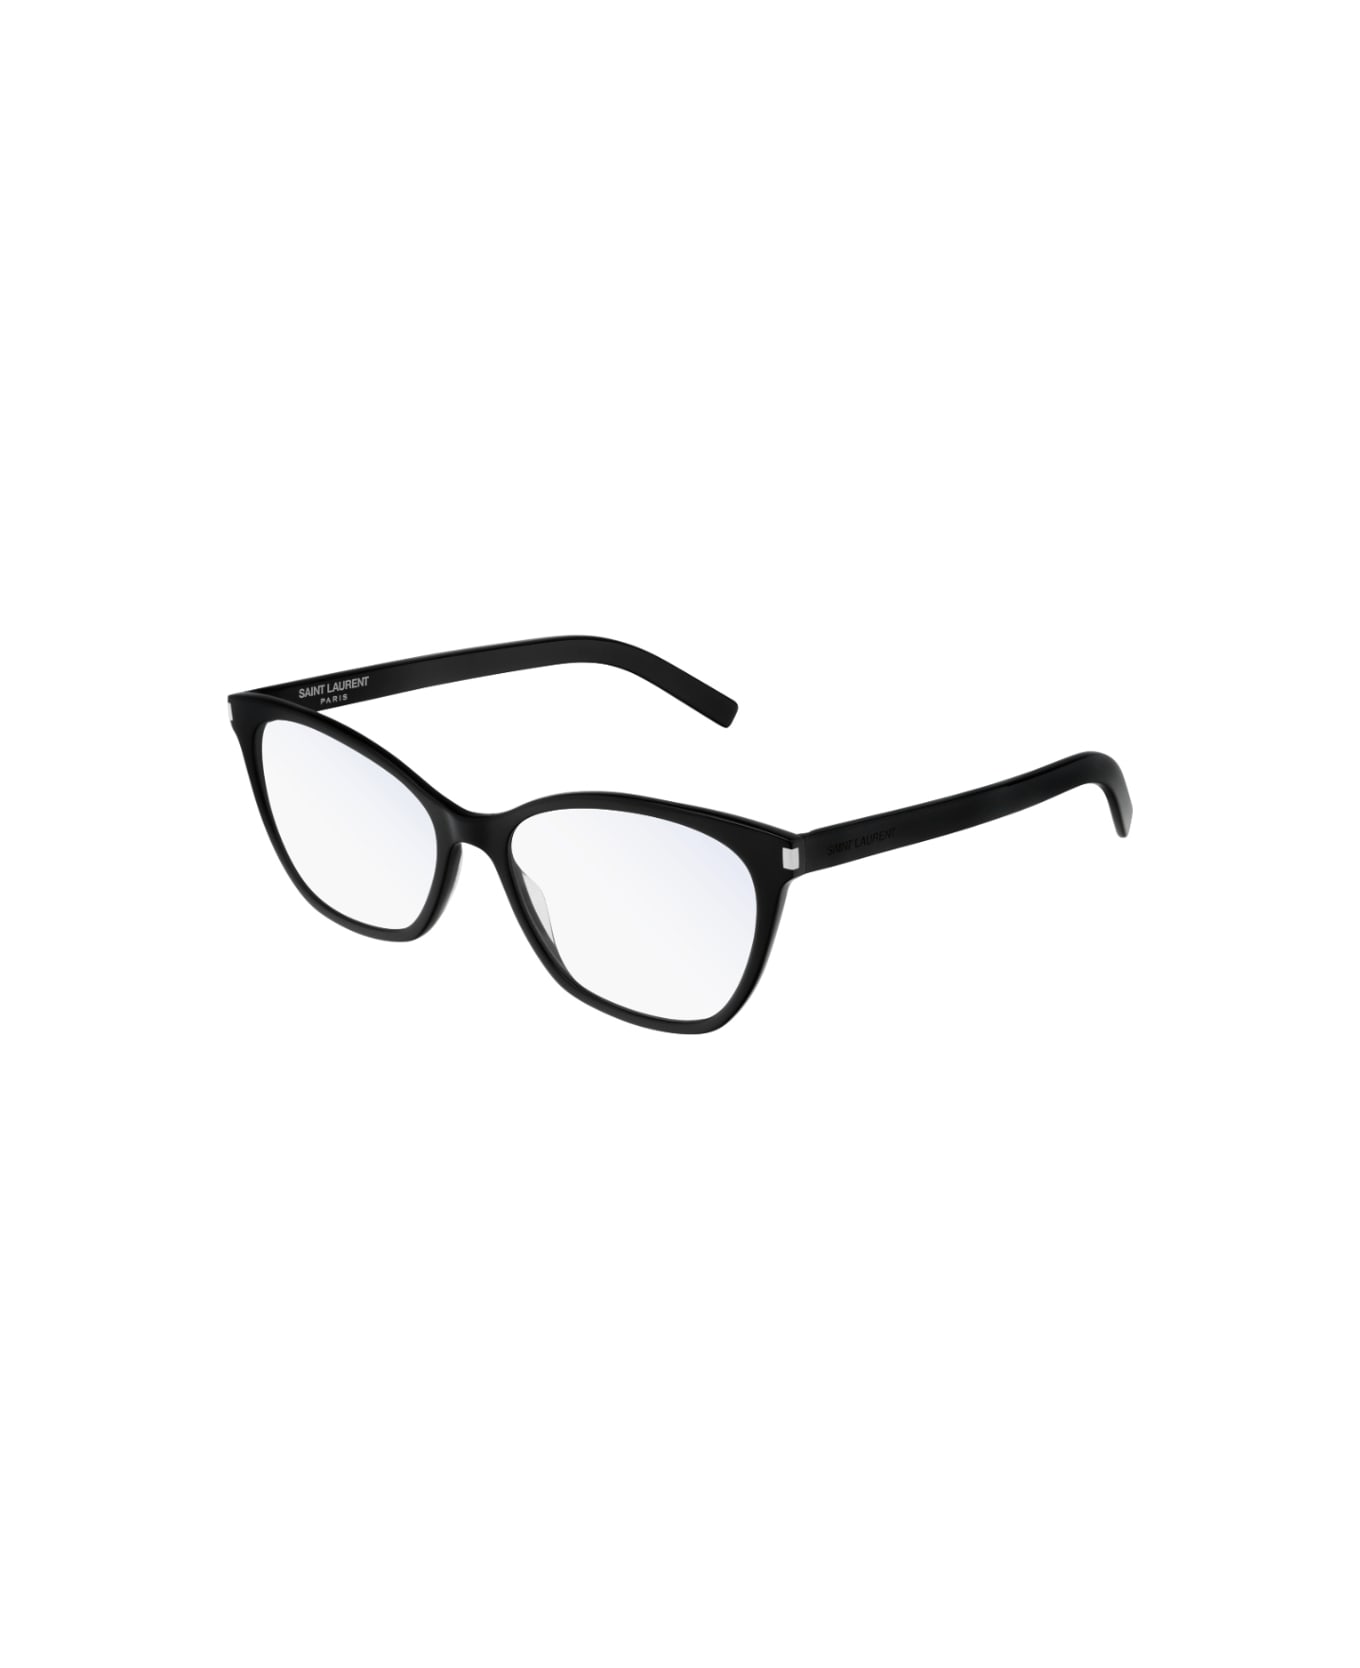 Saint Laurent Eyewear SL 287 001 Glasses